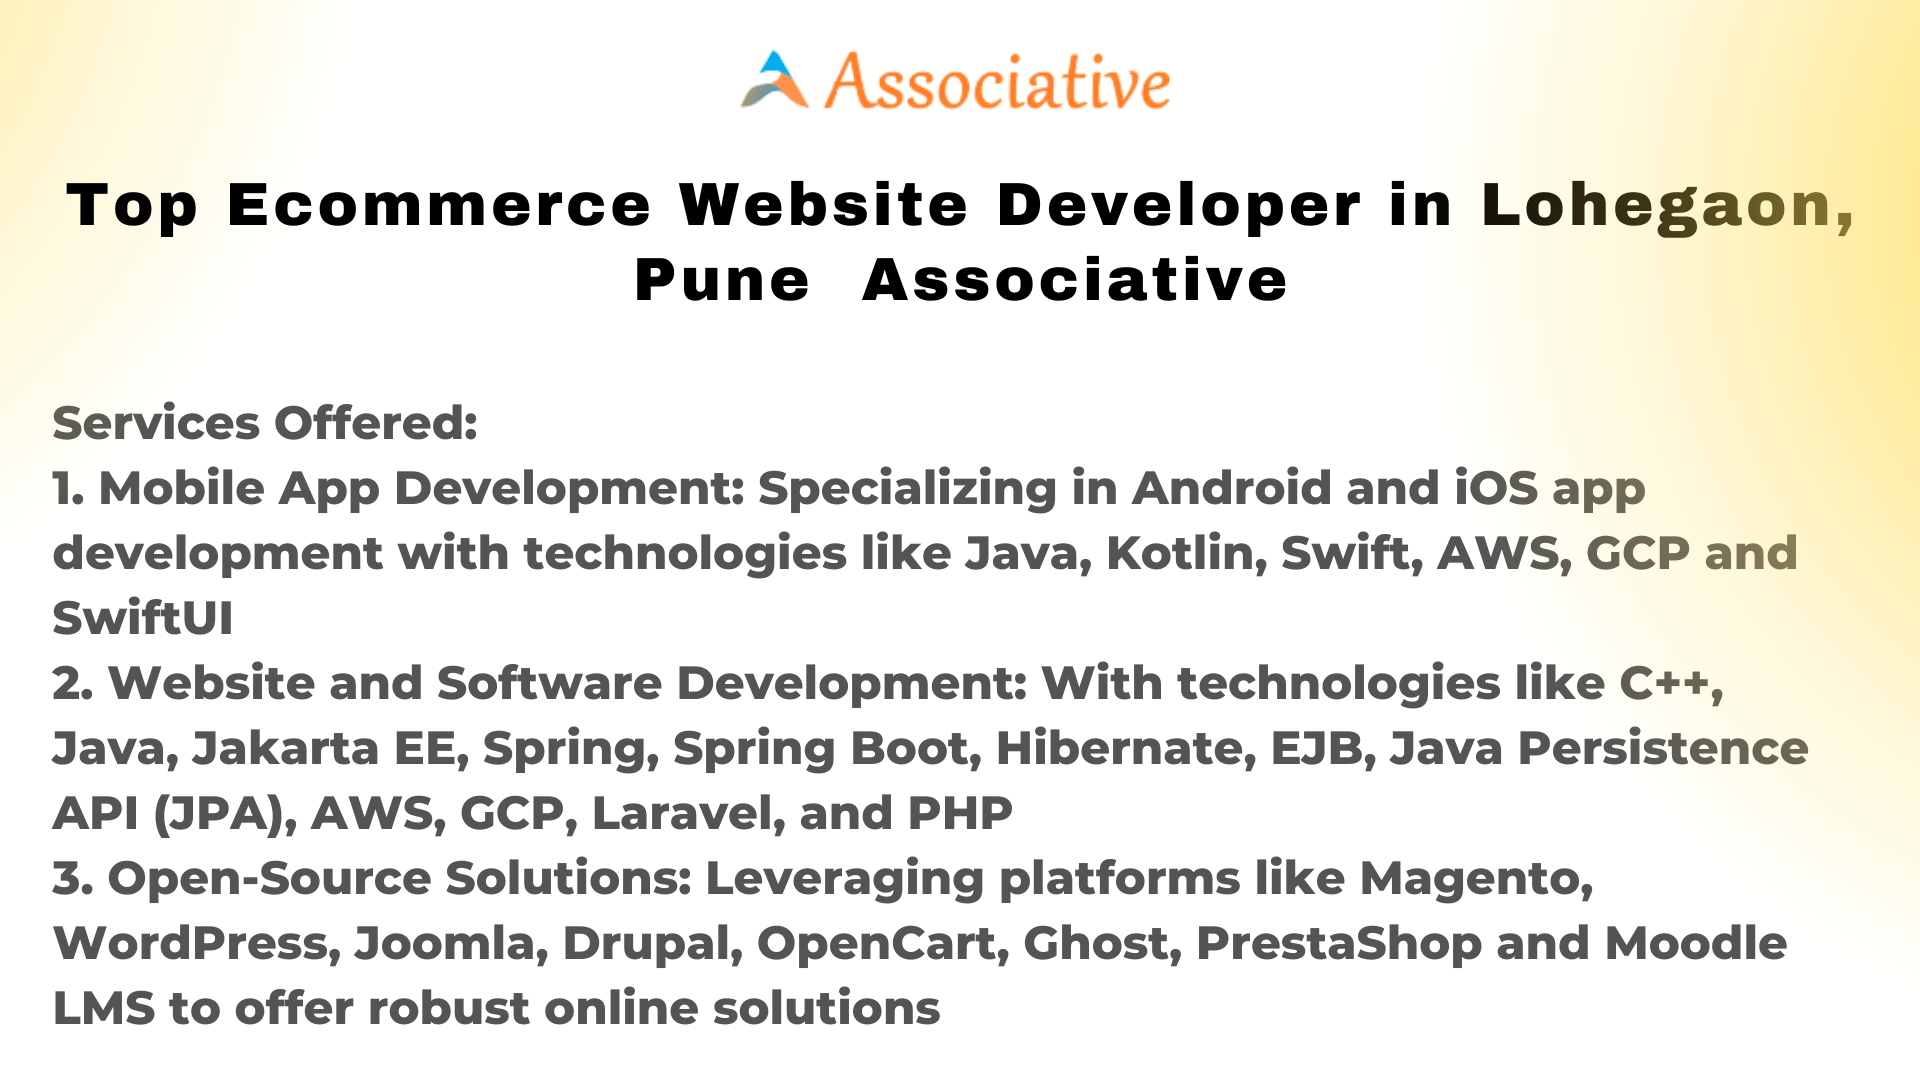 Top Ecommerce Website Developer in Lohegaon, Pune Associative